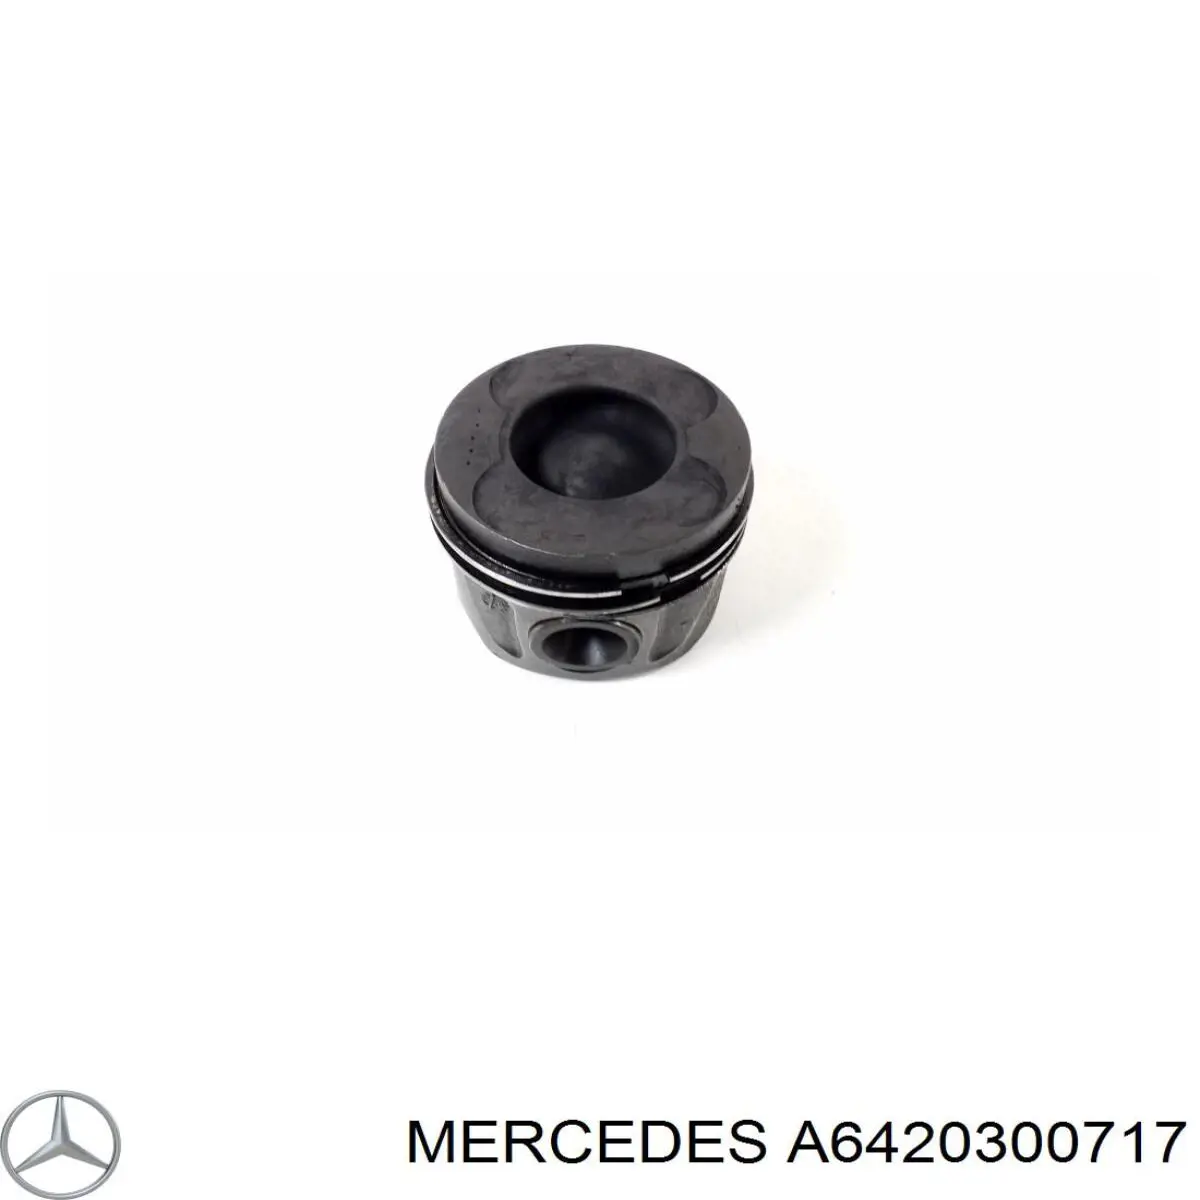 6420302717 Mercedes поршень в комплекте на 1 цилиндр, std